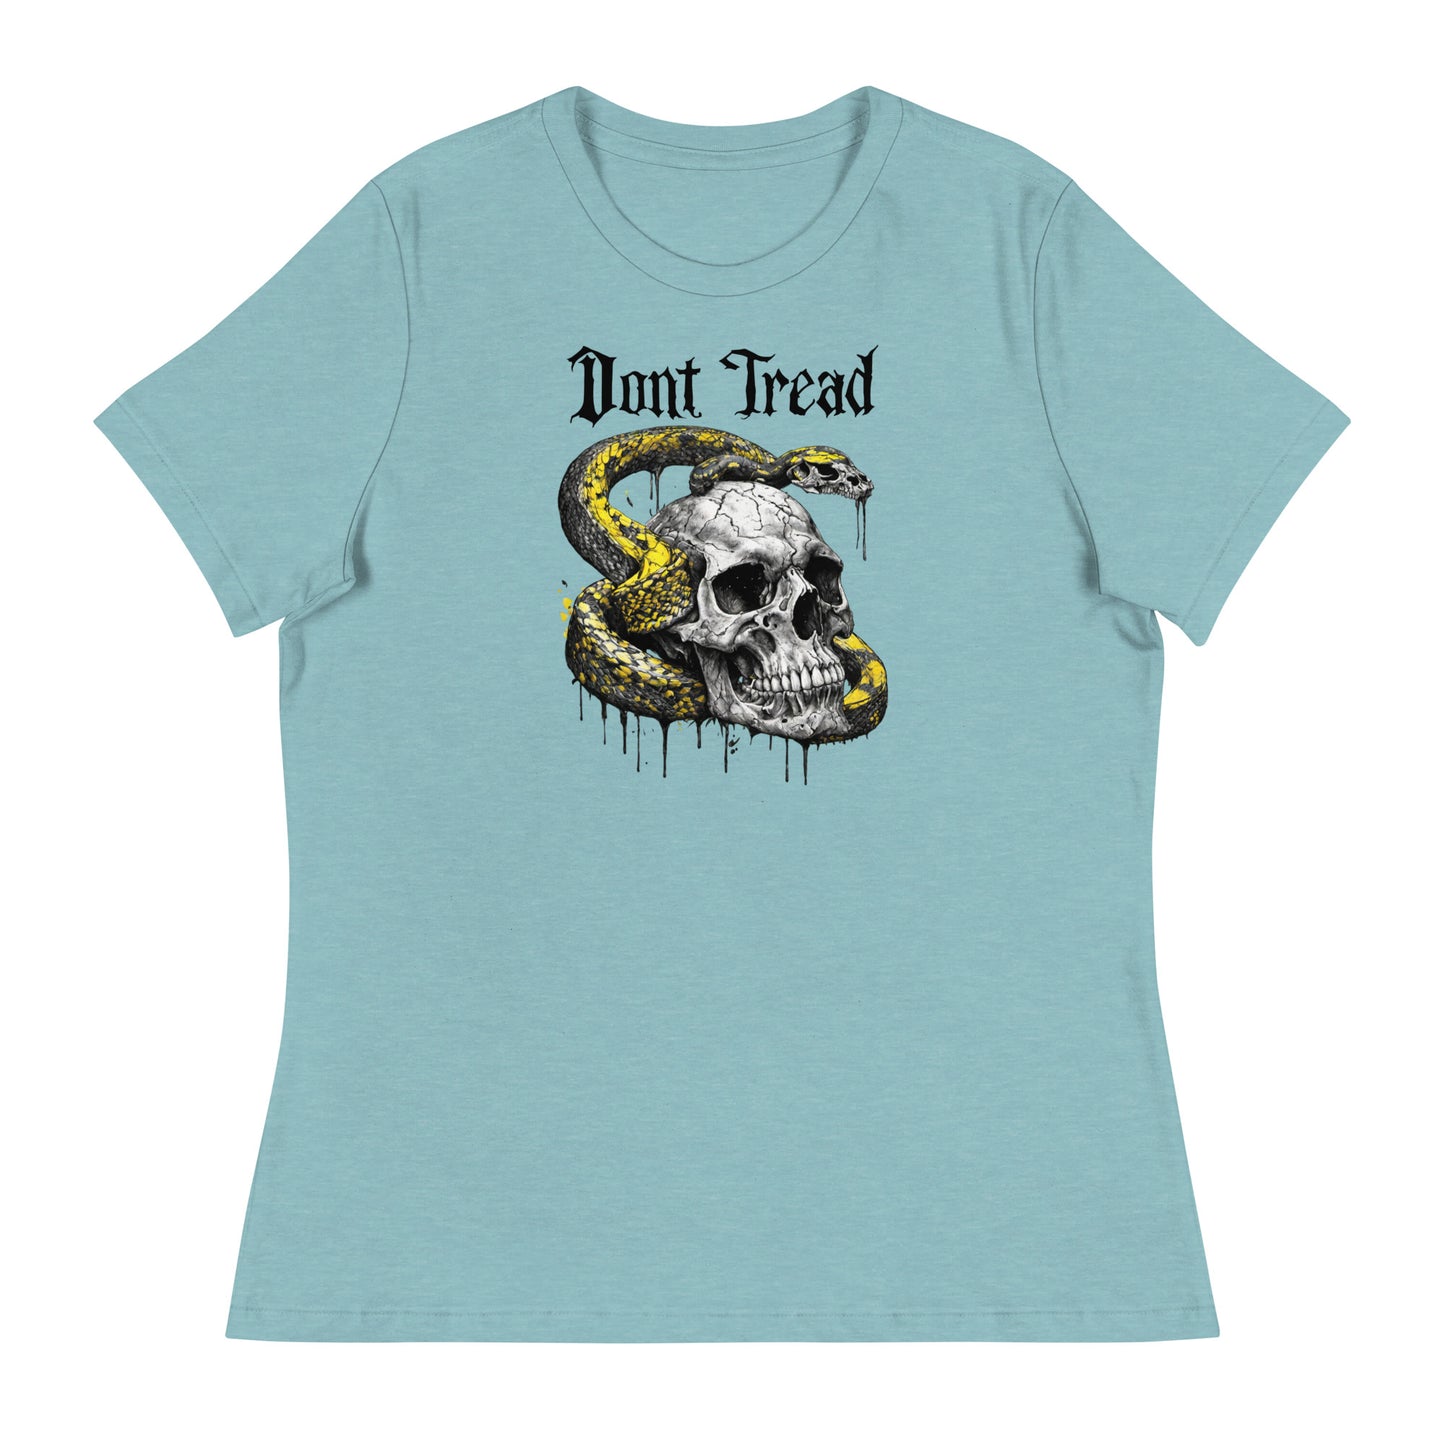 Don't Tread Snake & Skull 2nd Amendment Women's T-Shirt Heather Blue Lagoon